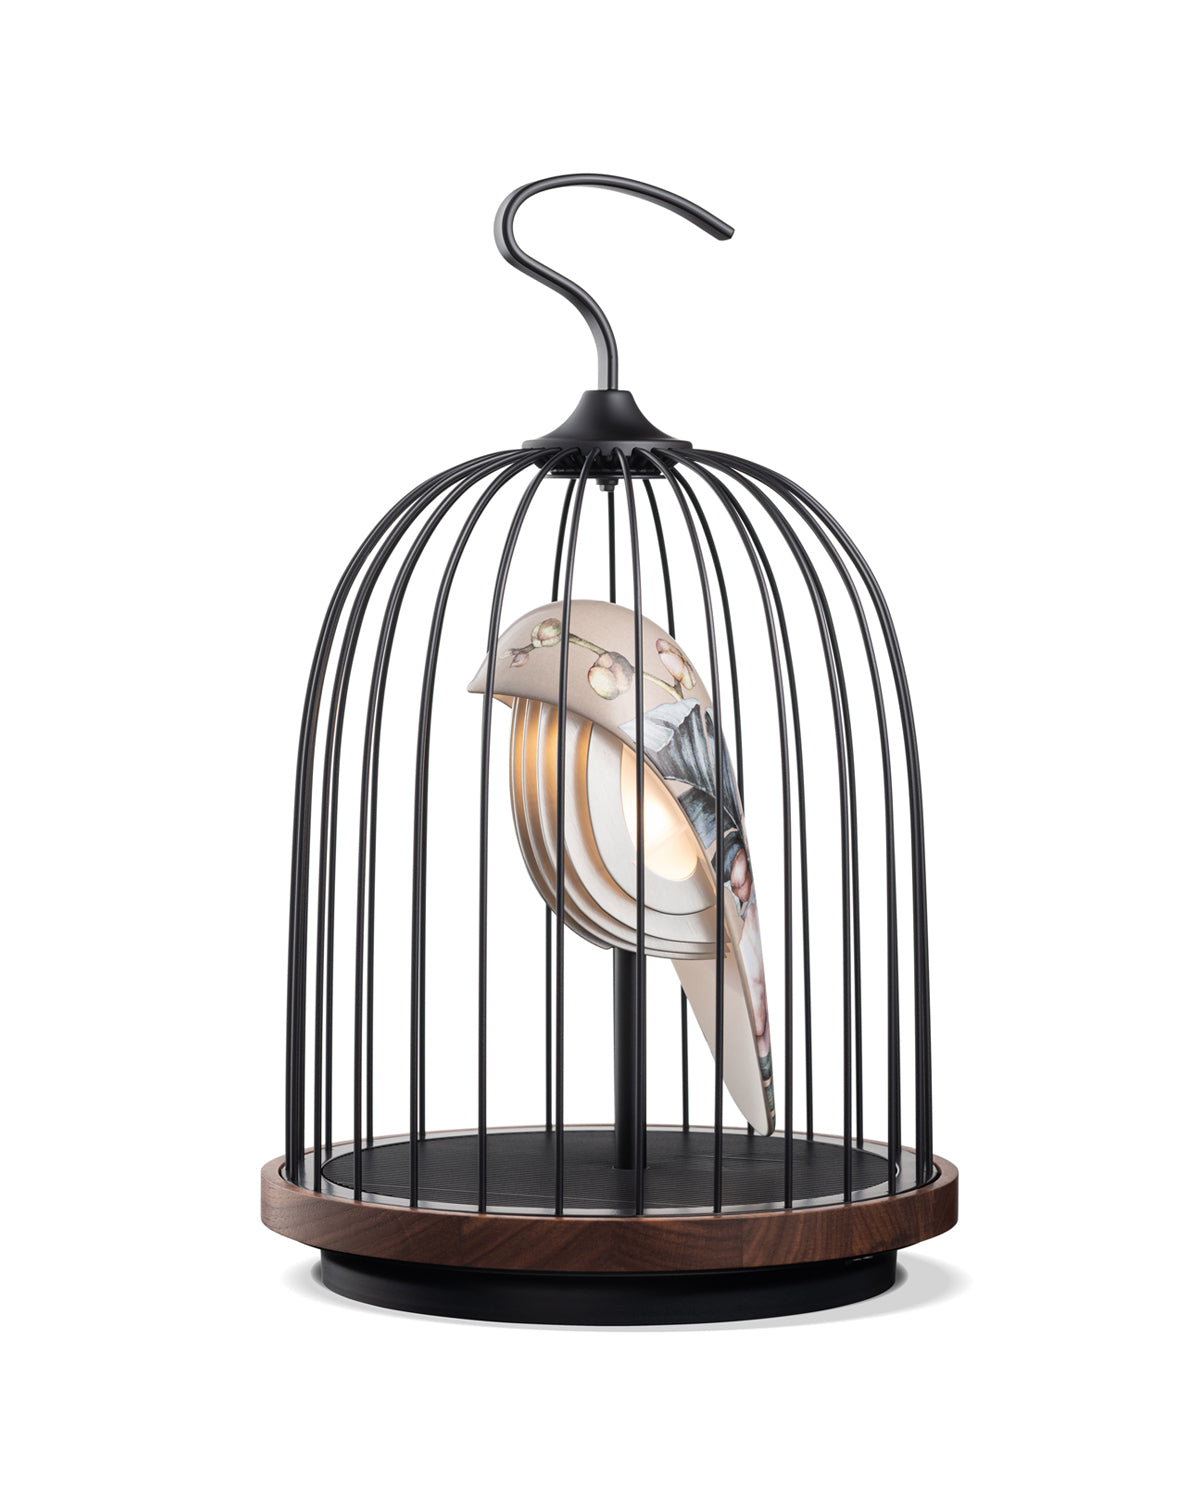 Daqi Bluetooth Speaker and Light pale pink porcelain bird with flower pattern black cage and walnut color speaker base